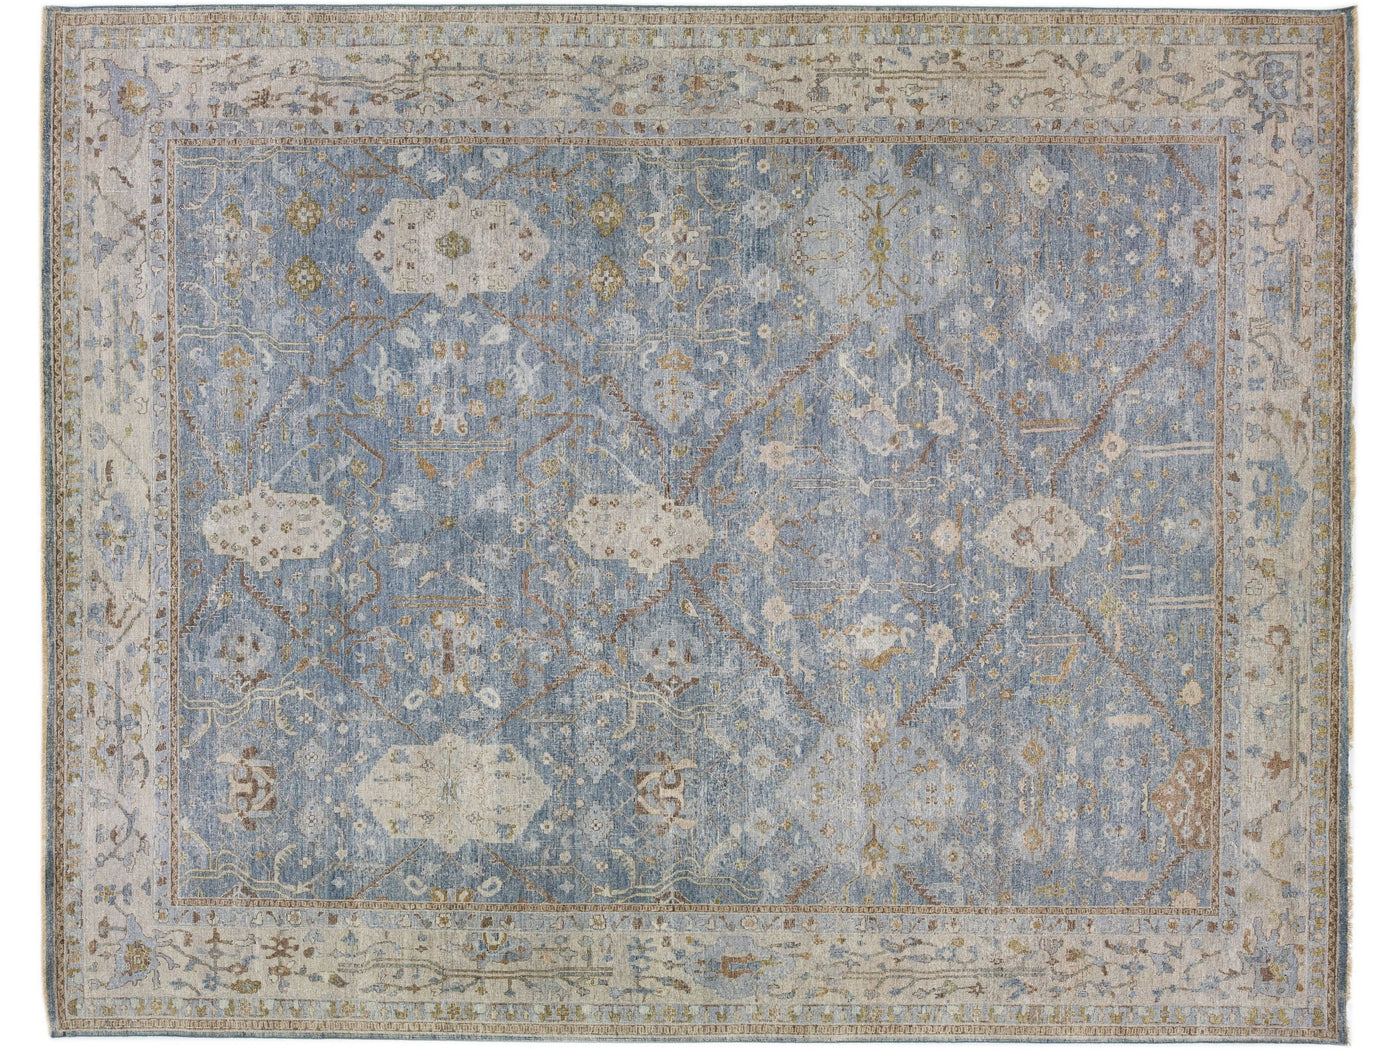 Apadana's Persian Tabriz Style Handmade Floral Blue Wool Rug